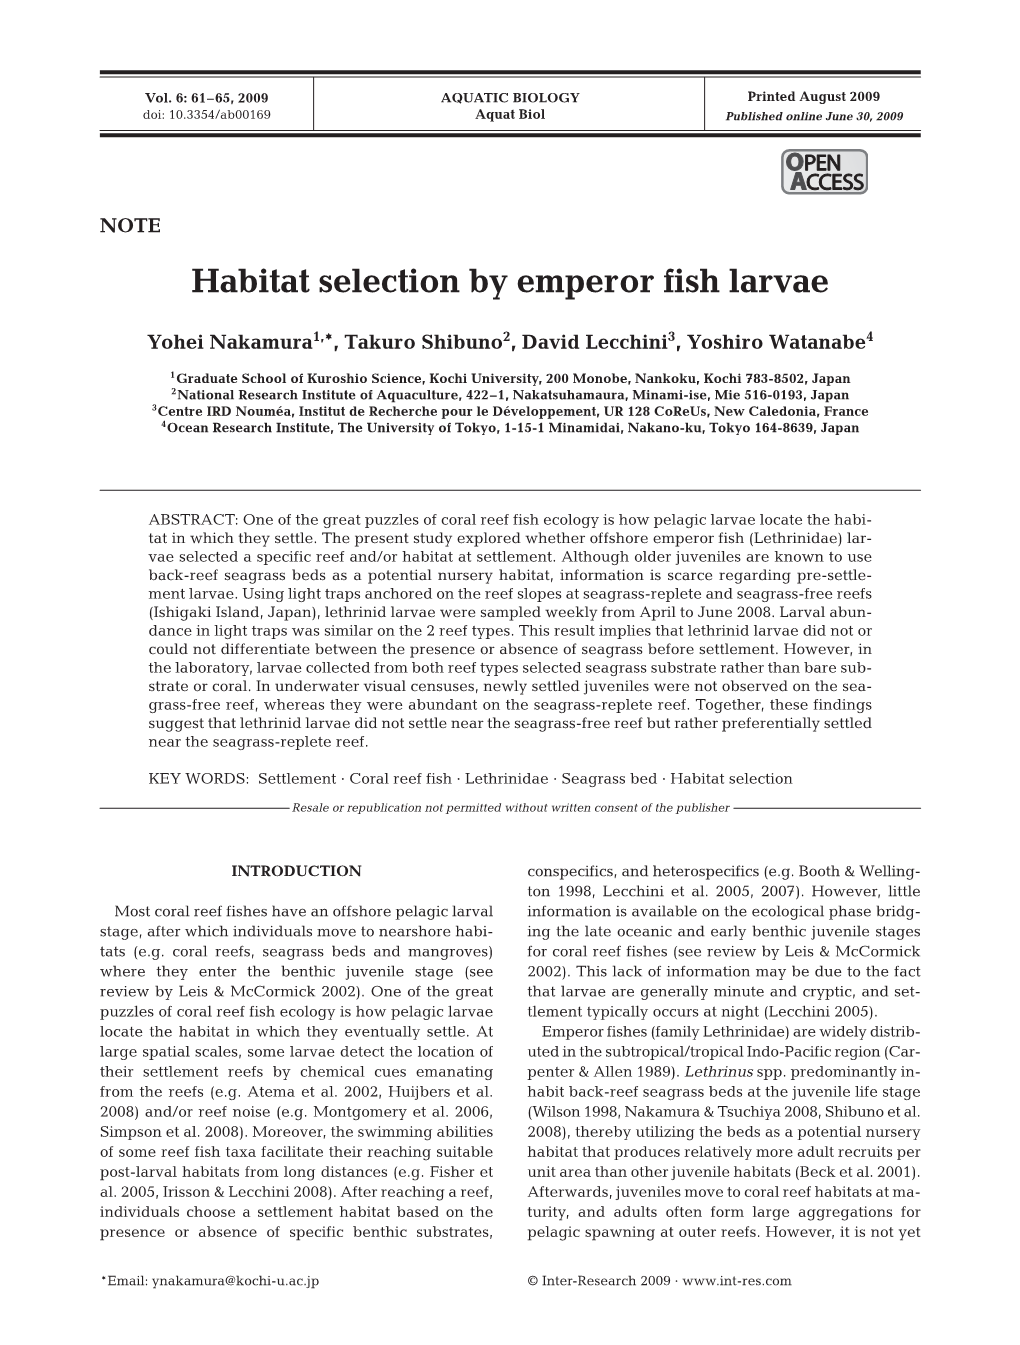 Habitat Selection by Emperor Fish Larvae